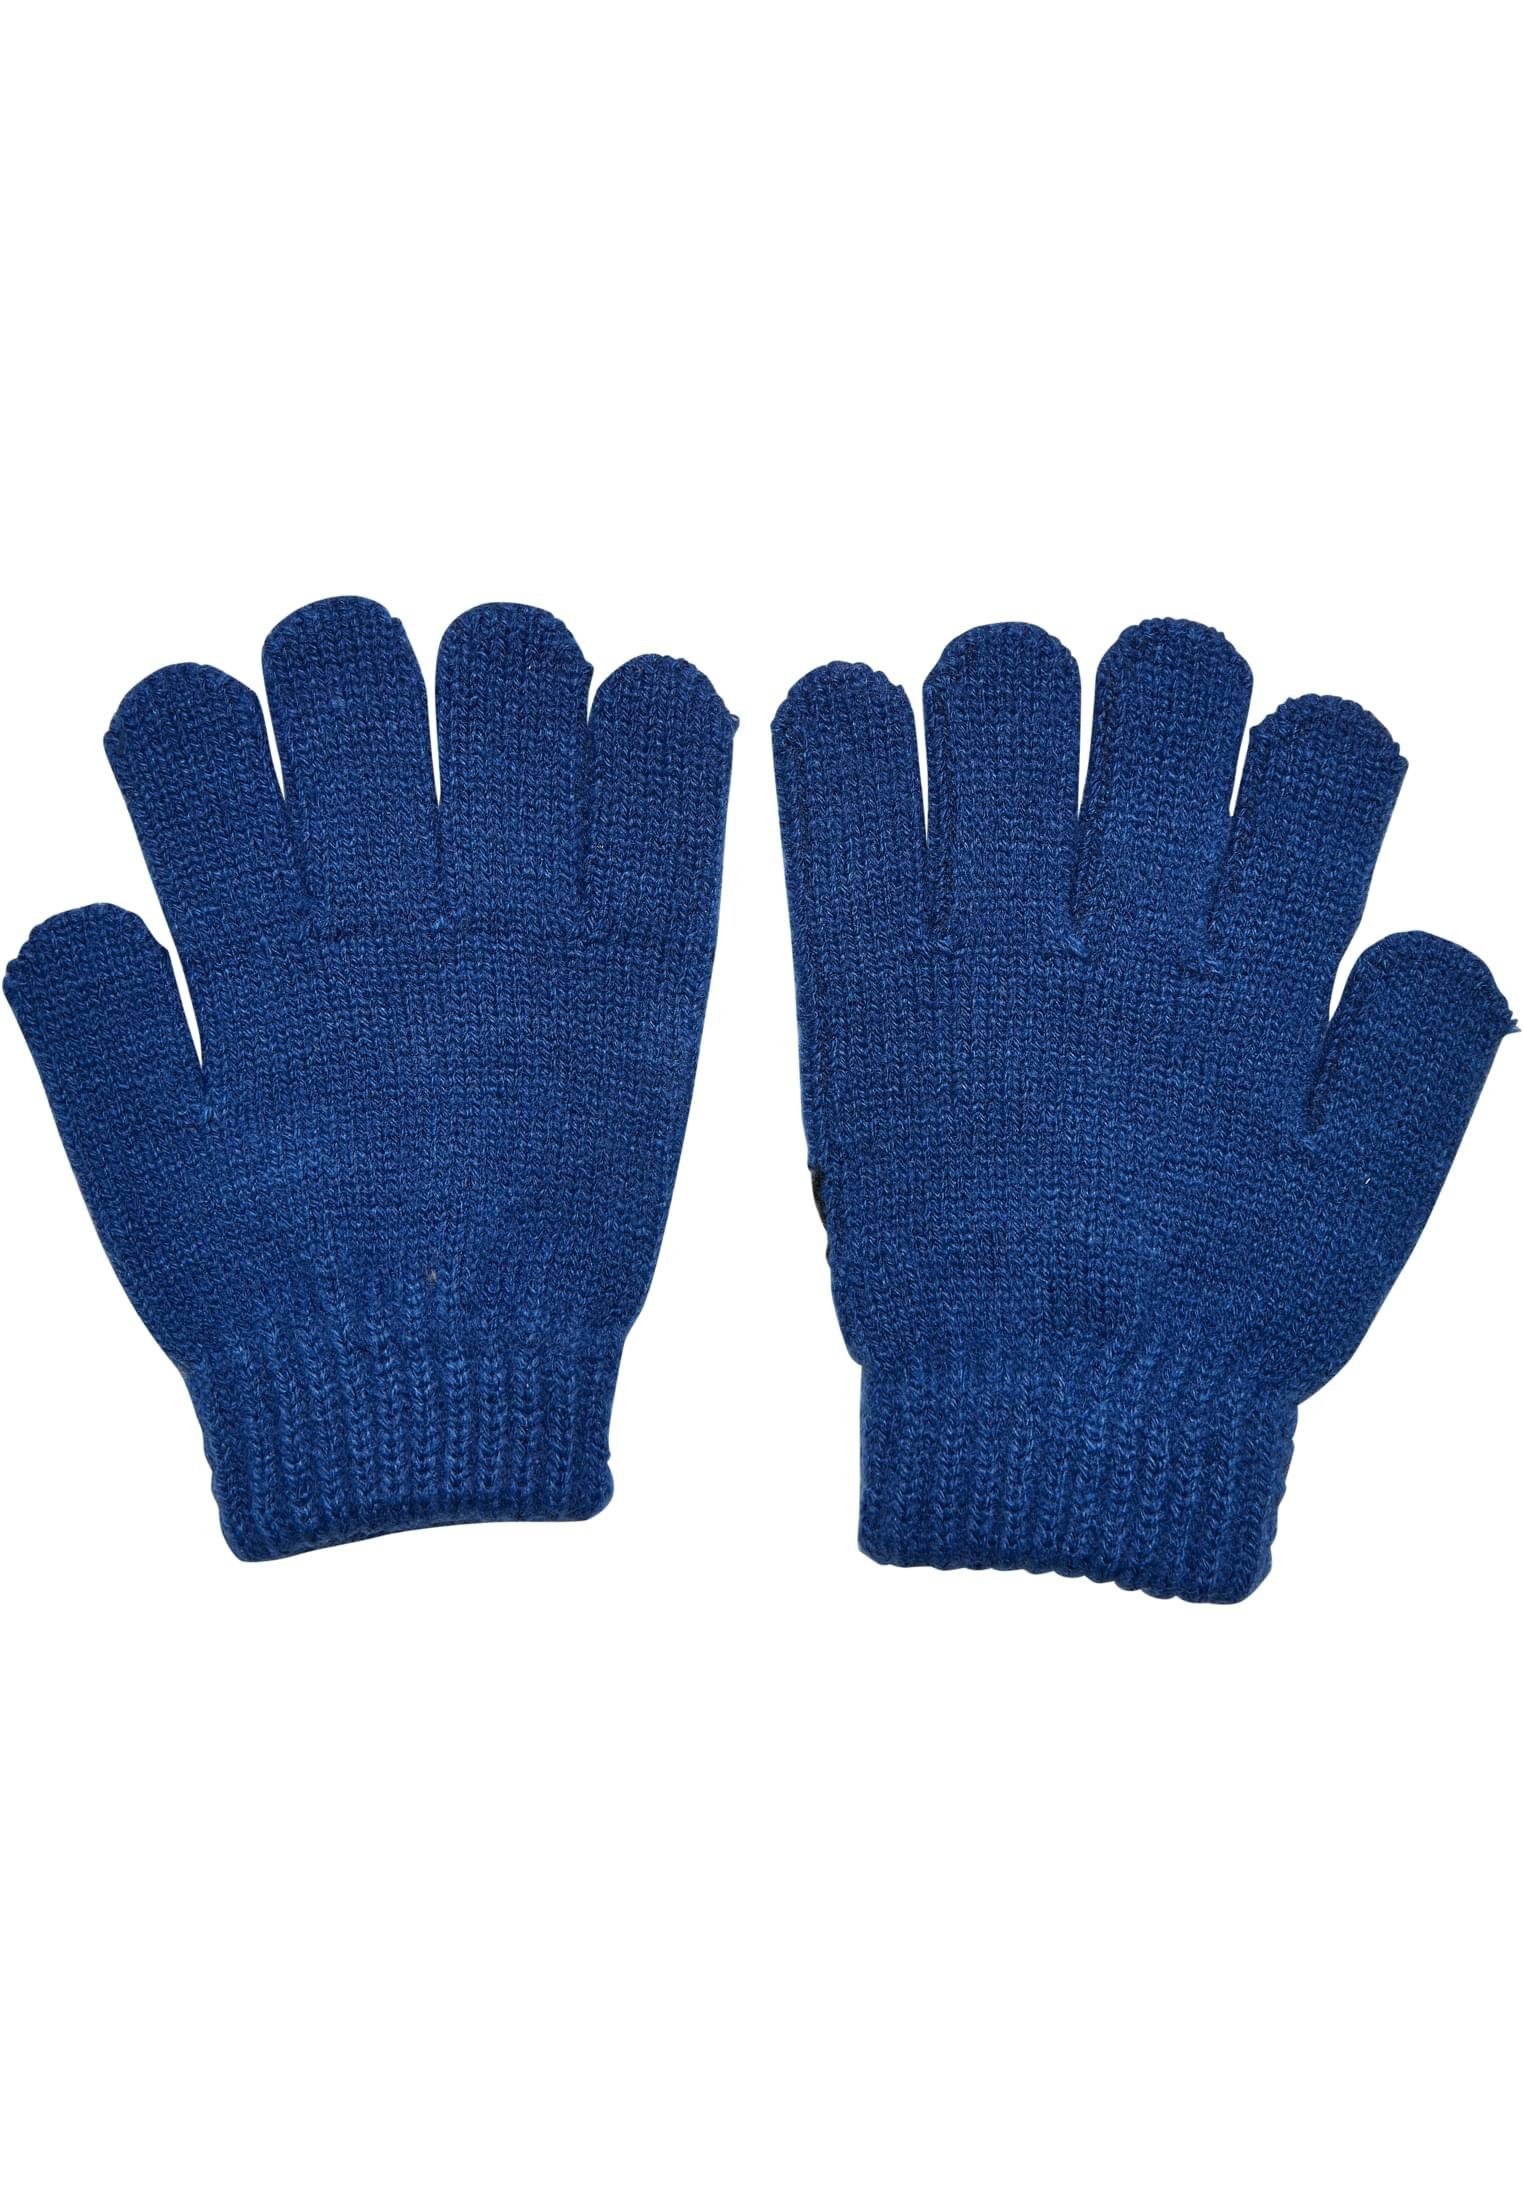 MisterTee Baumwollhandschuhe Accessoires NASA Knit Glove Kids royal